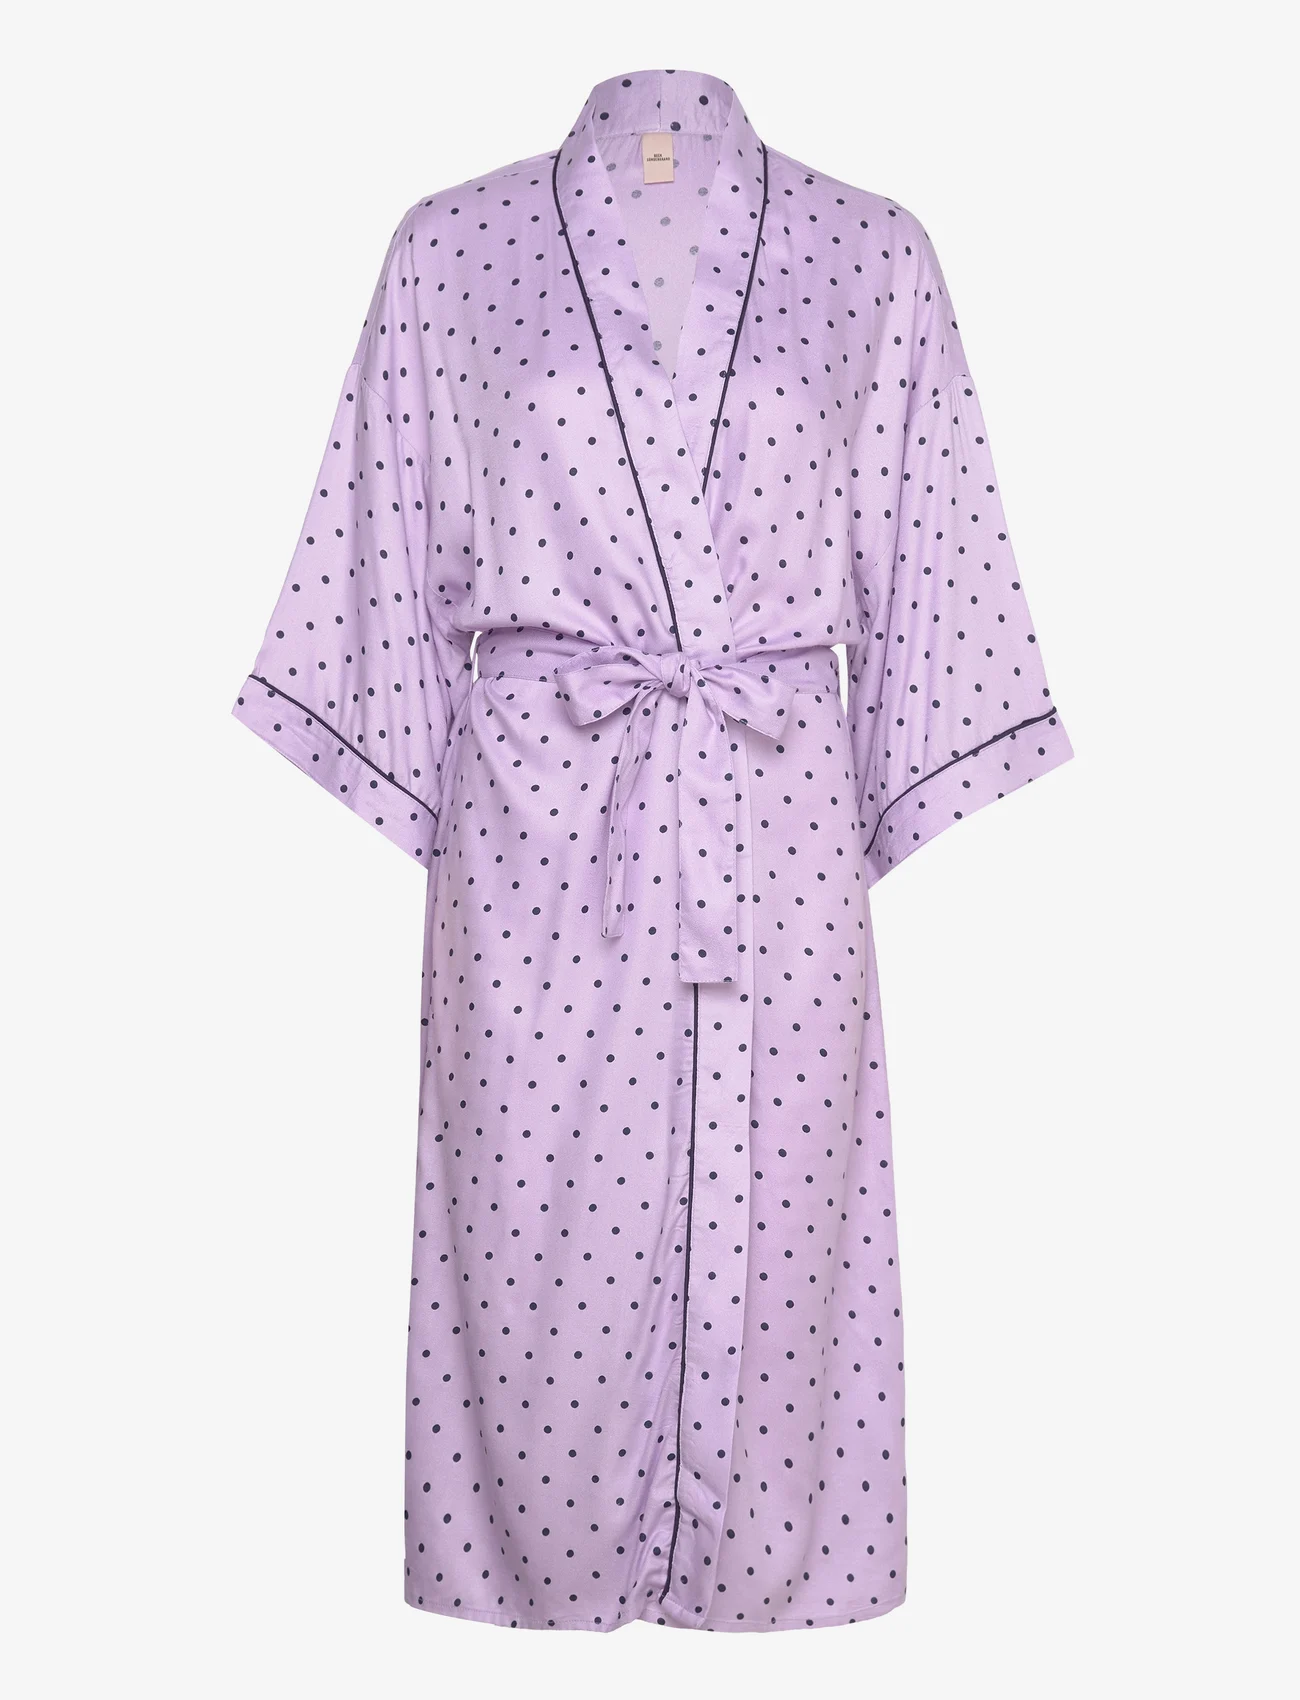 Becksöndergaard - Dot Liberte Kimono - bursdagsgaver - paisley purple - 0